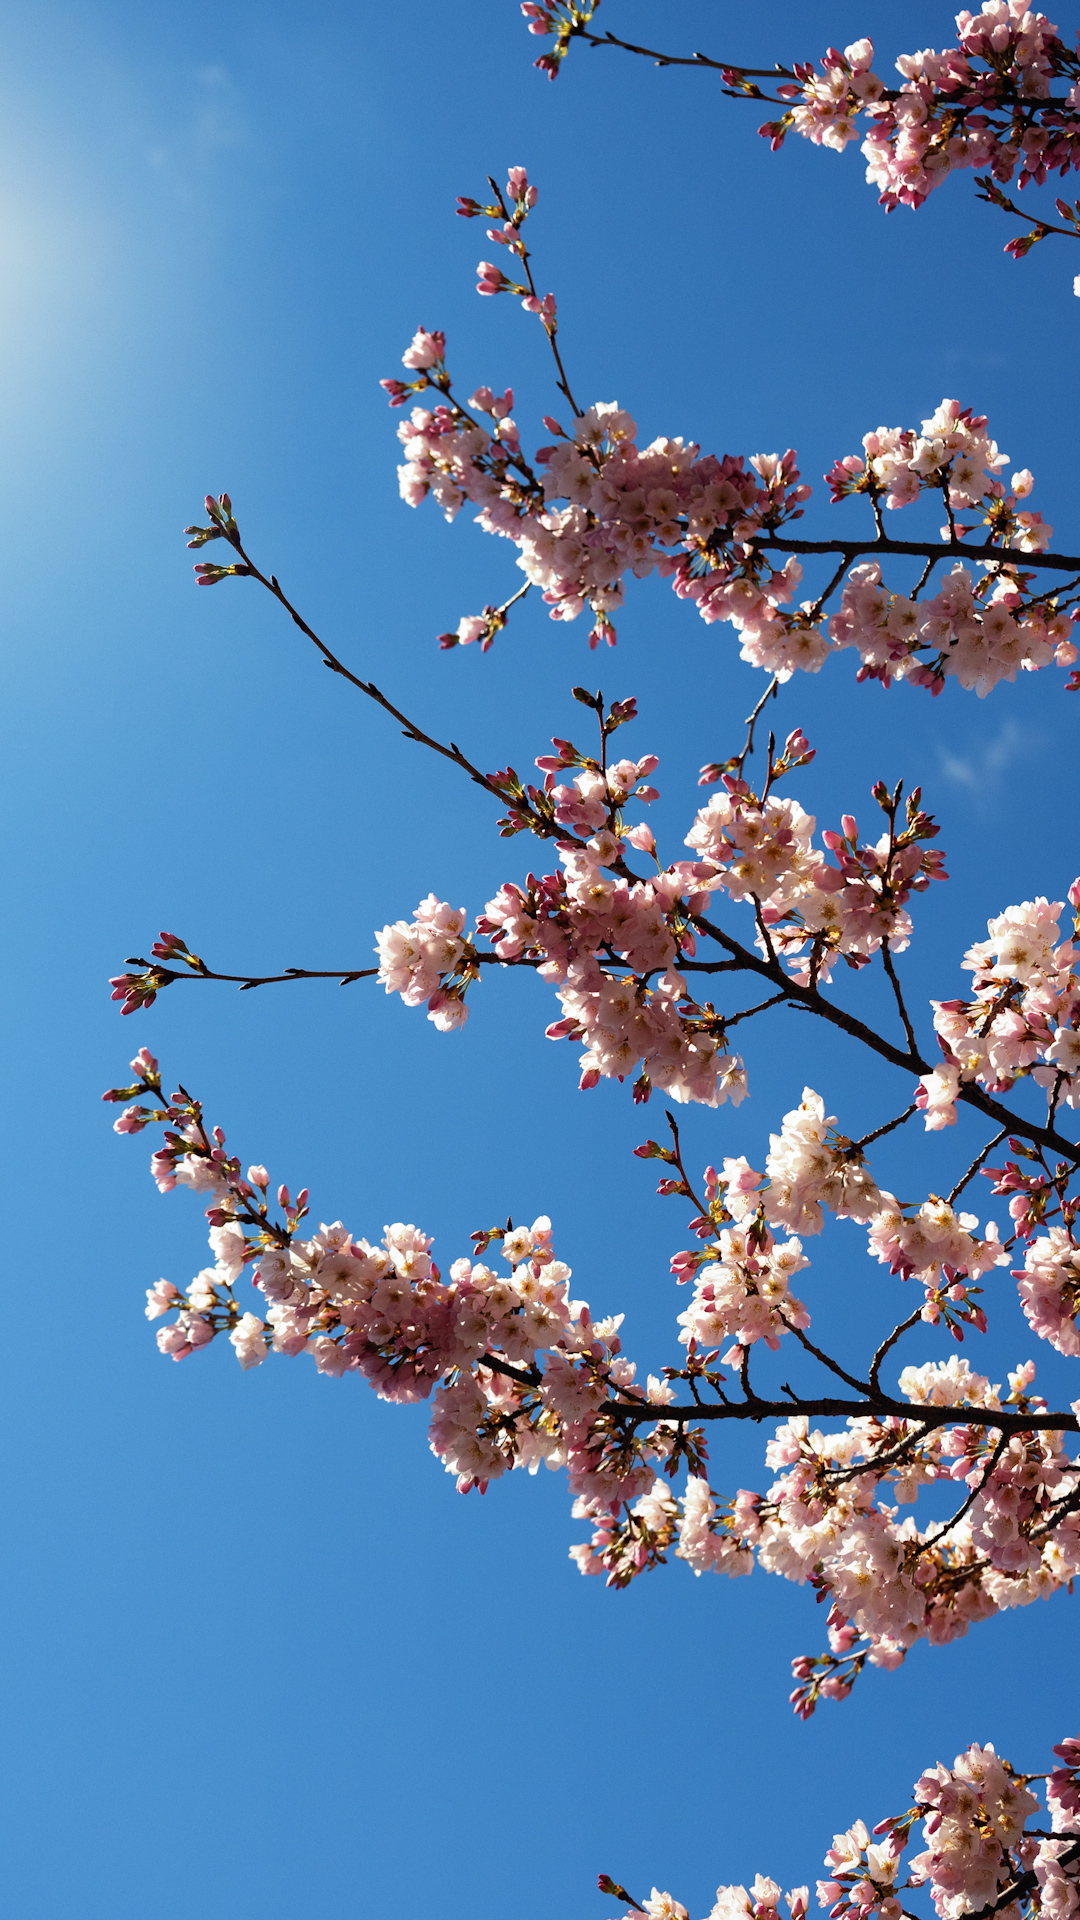 D.C. cherry blossoms 2023 peak bloom date announced March 22-25 - Axios  Washington D.C.